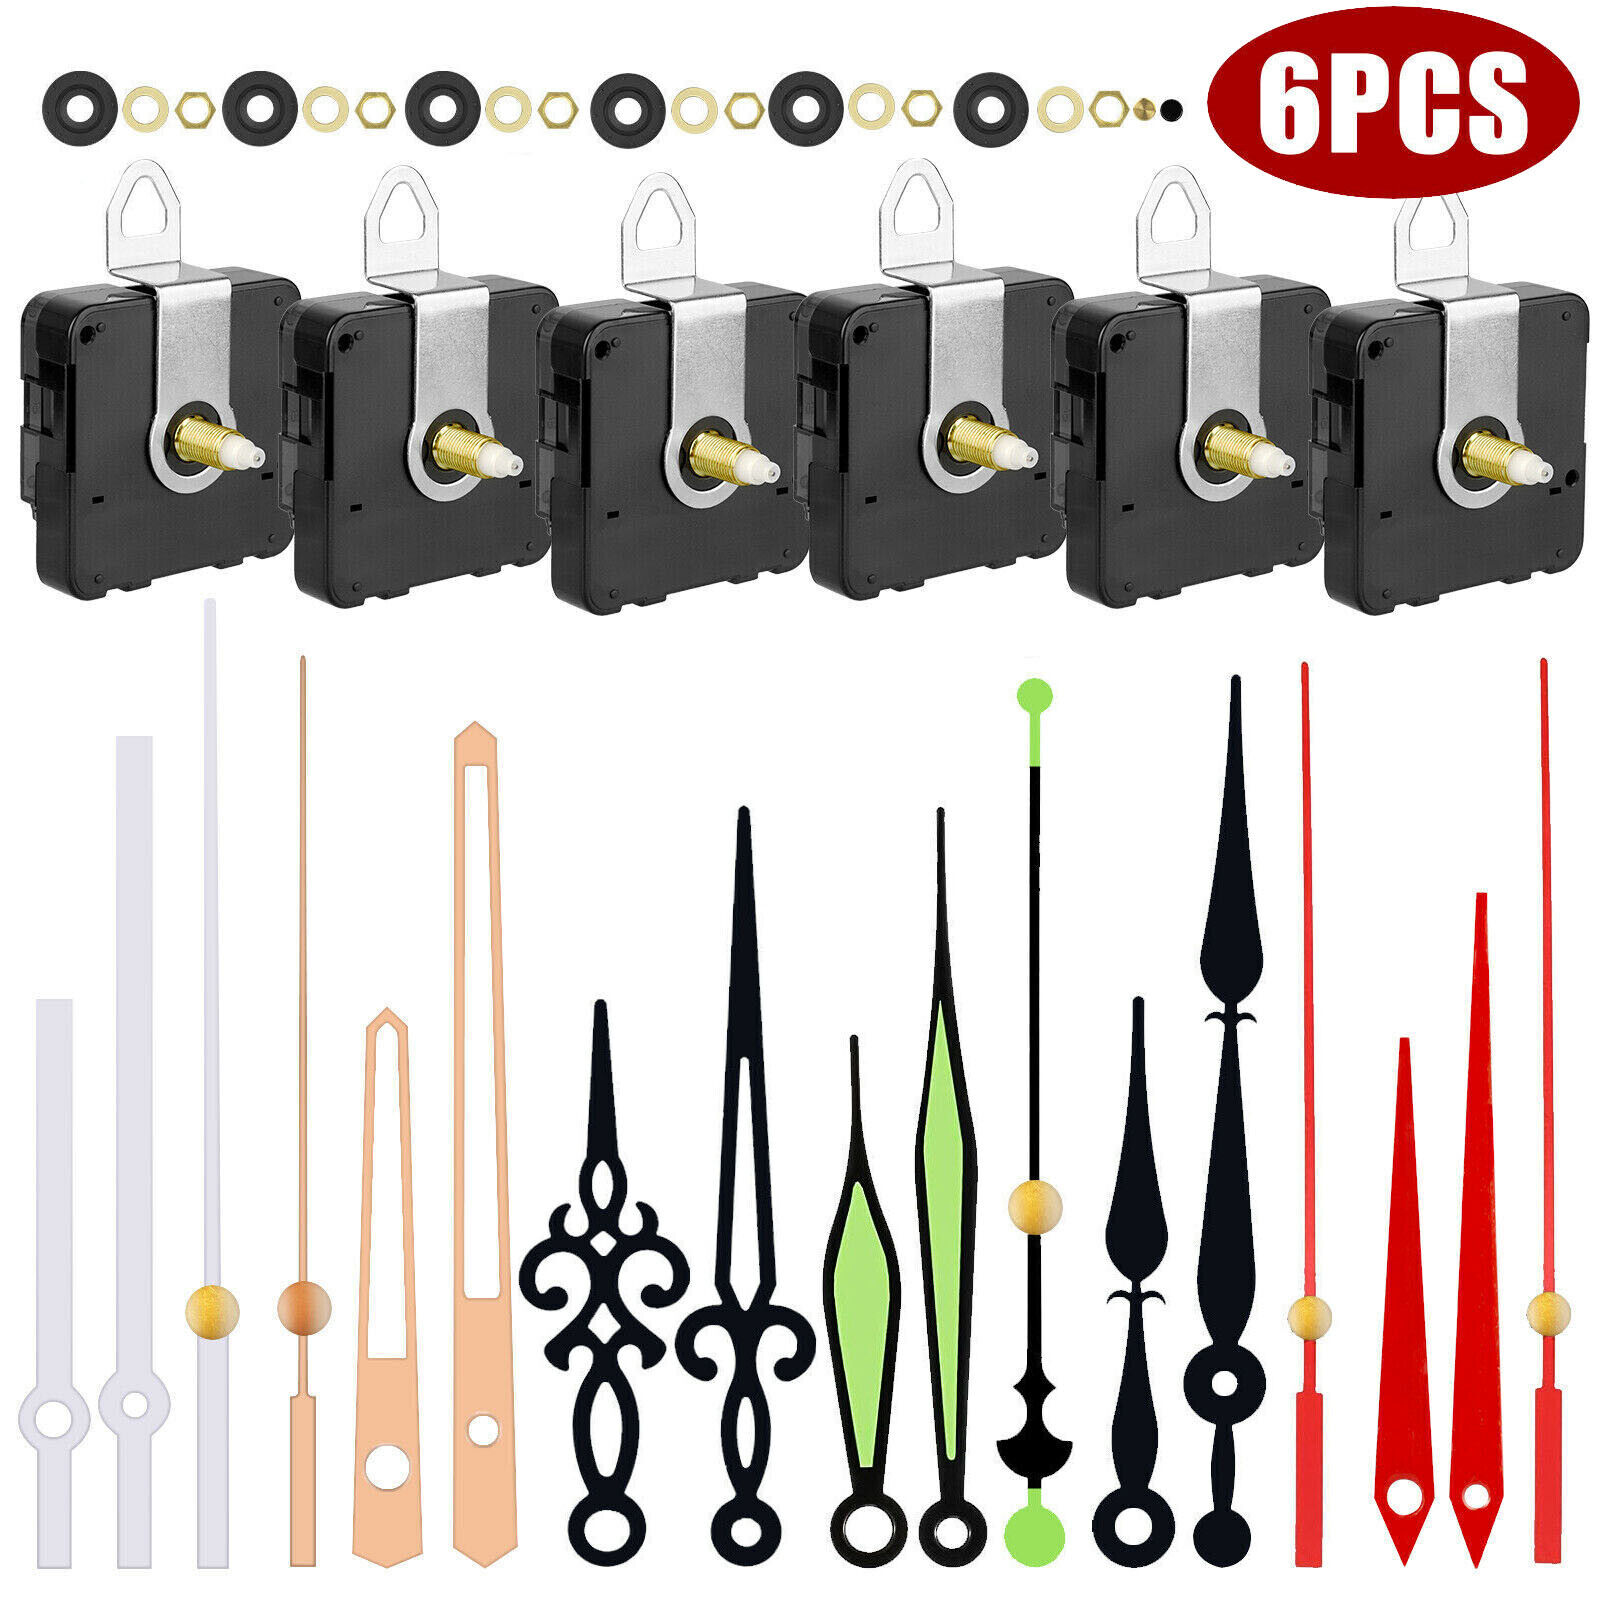 6PCS DIY Wall Quartz Clock Movement Mechanism Replacement Repair Tool Parts Kit